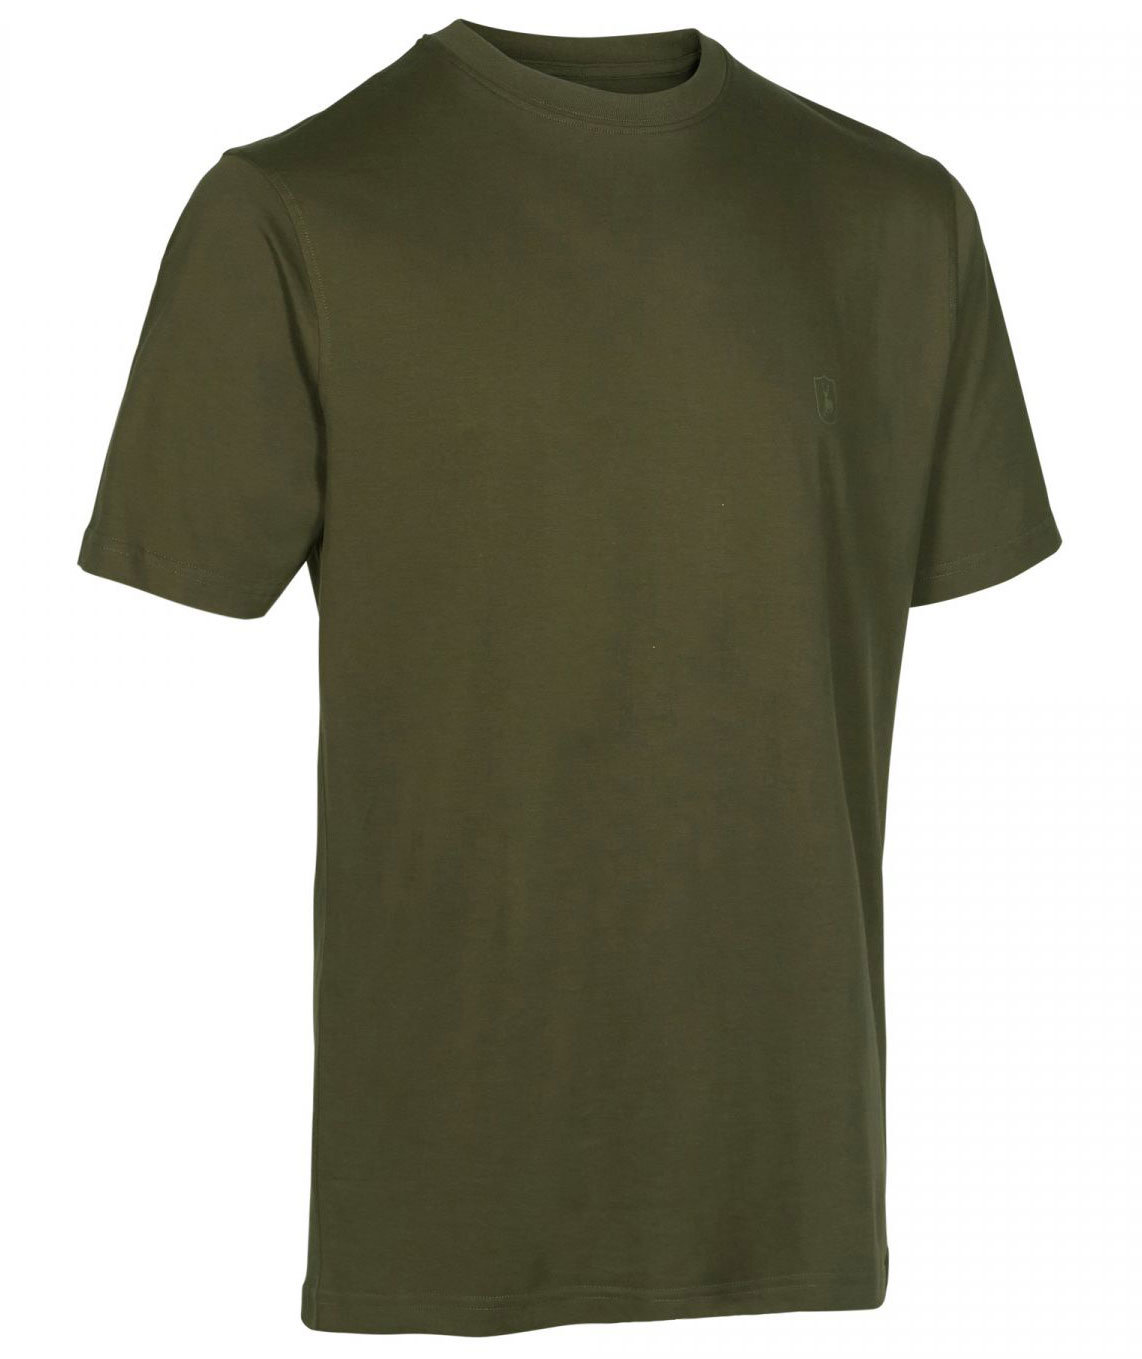 Deerhunter Bamboo T-Shirt Thermal Underwear Green Top Short Sleeved 